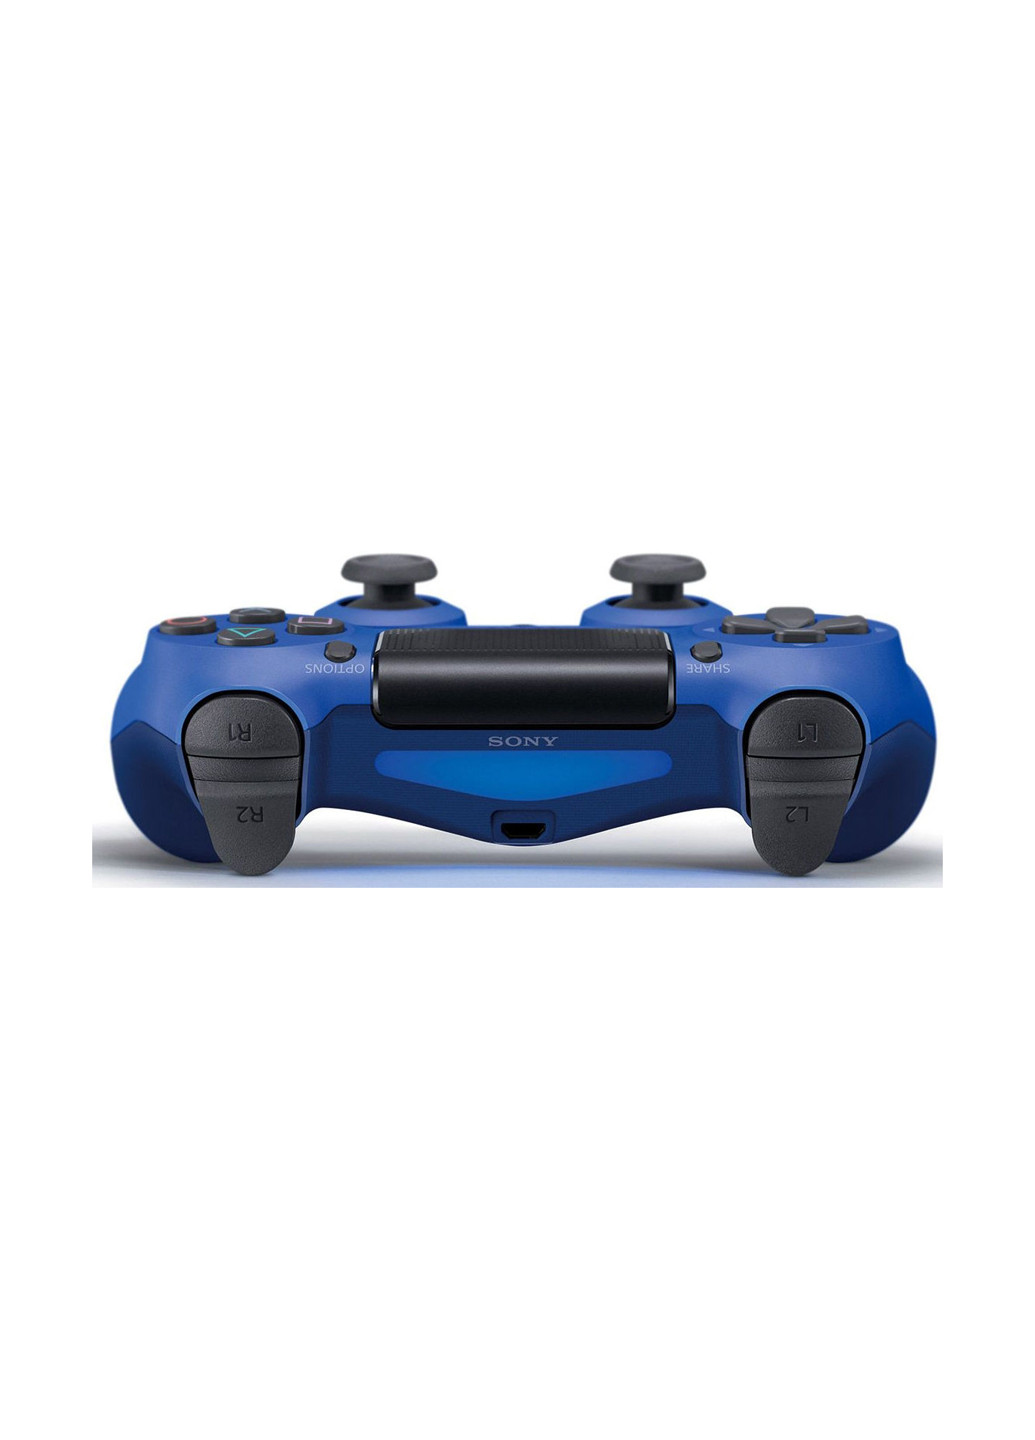 Геймпад беспроводной Dualshock v2 Wave Blue PlayStation беспроводной dualshock v2 wave blue (149267836)